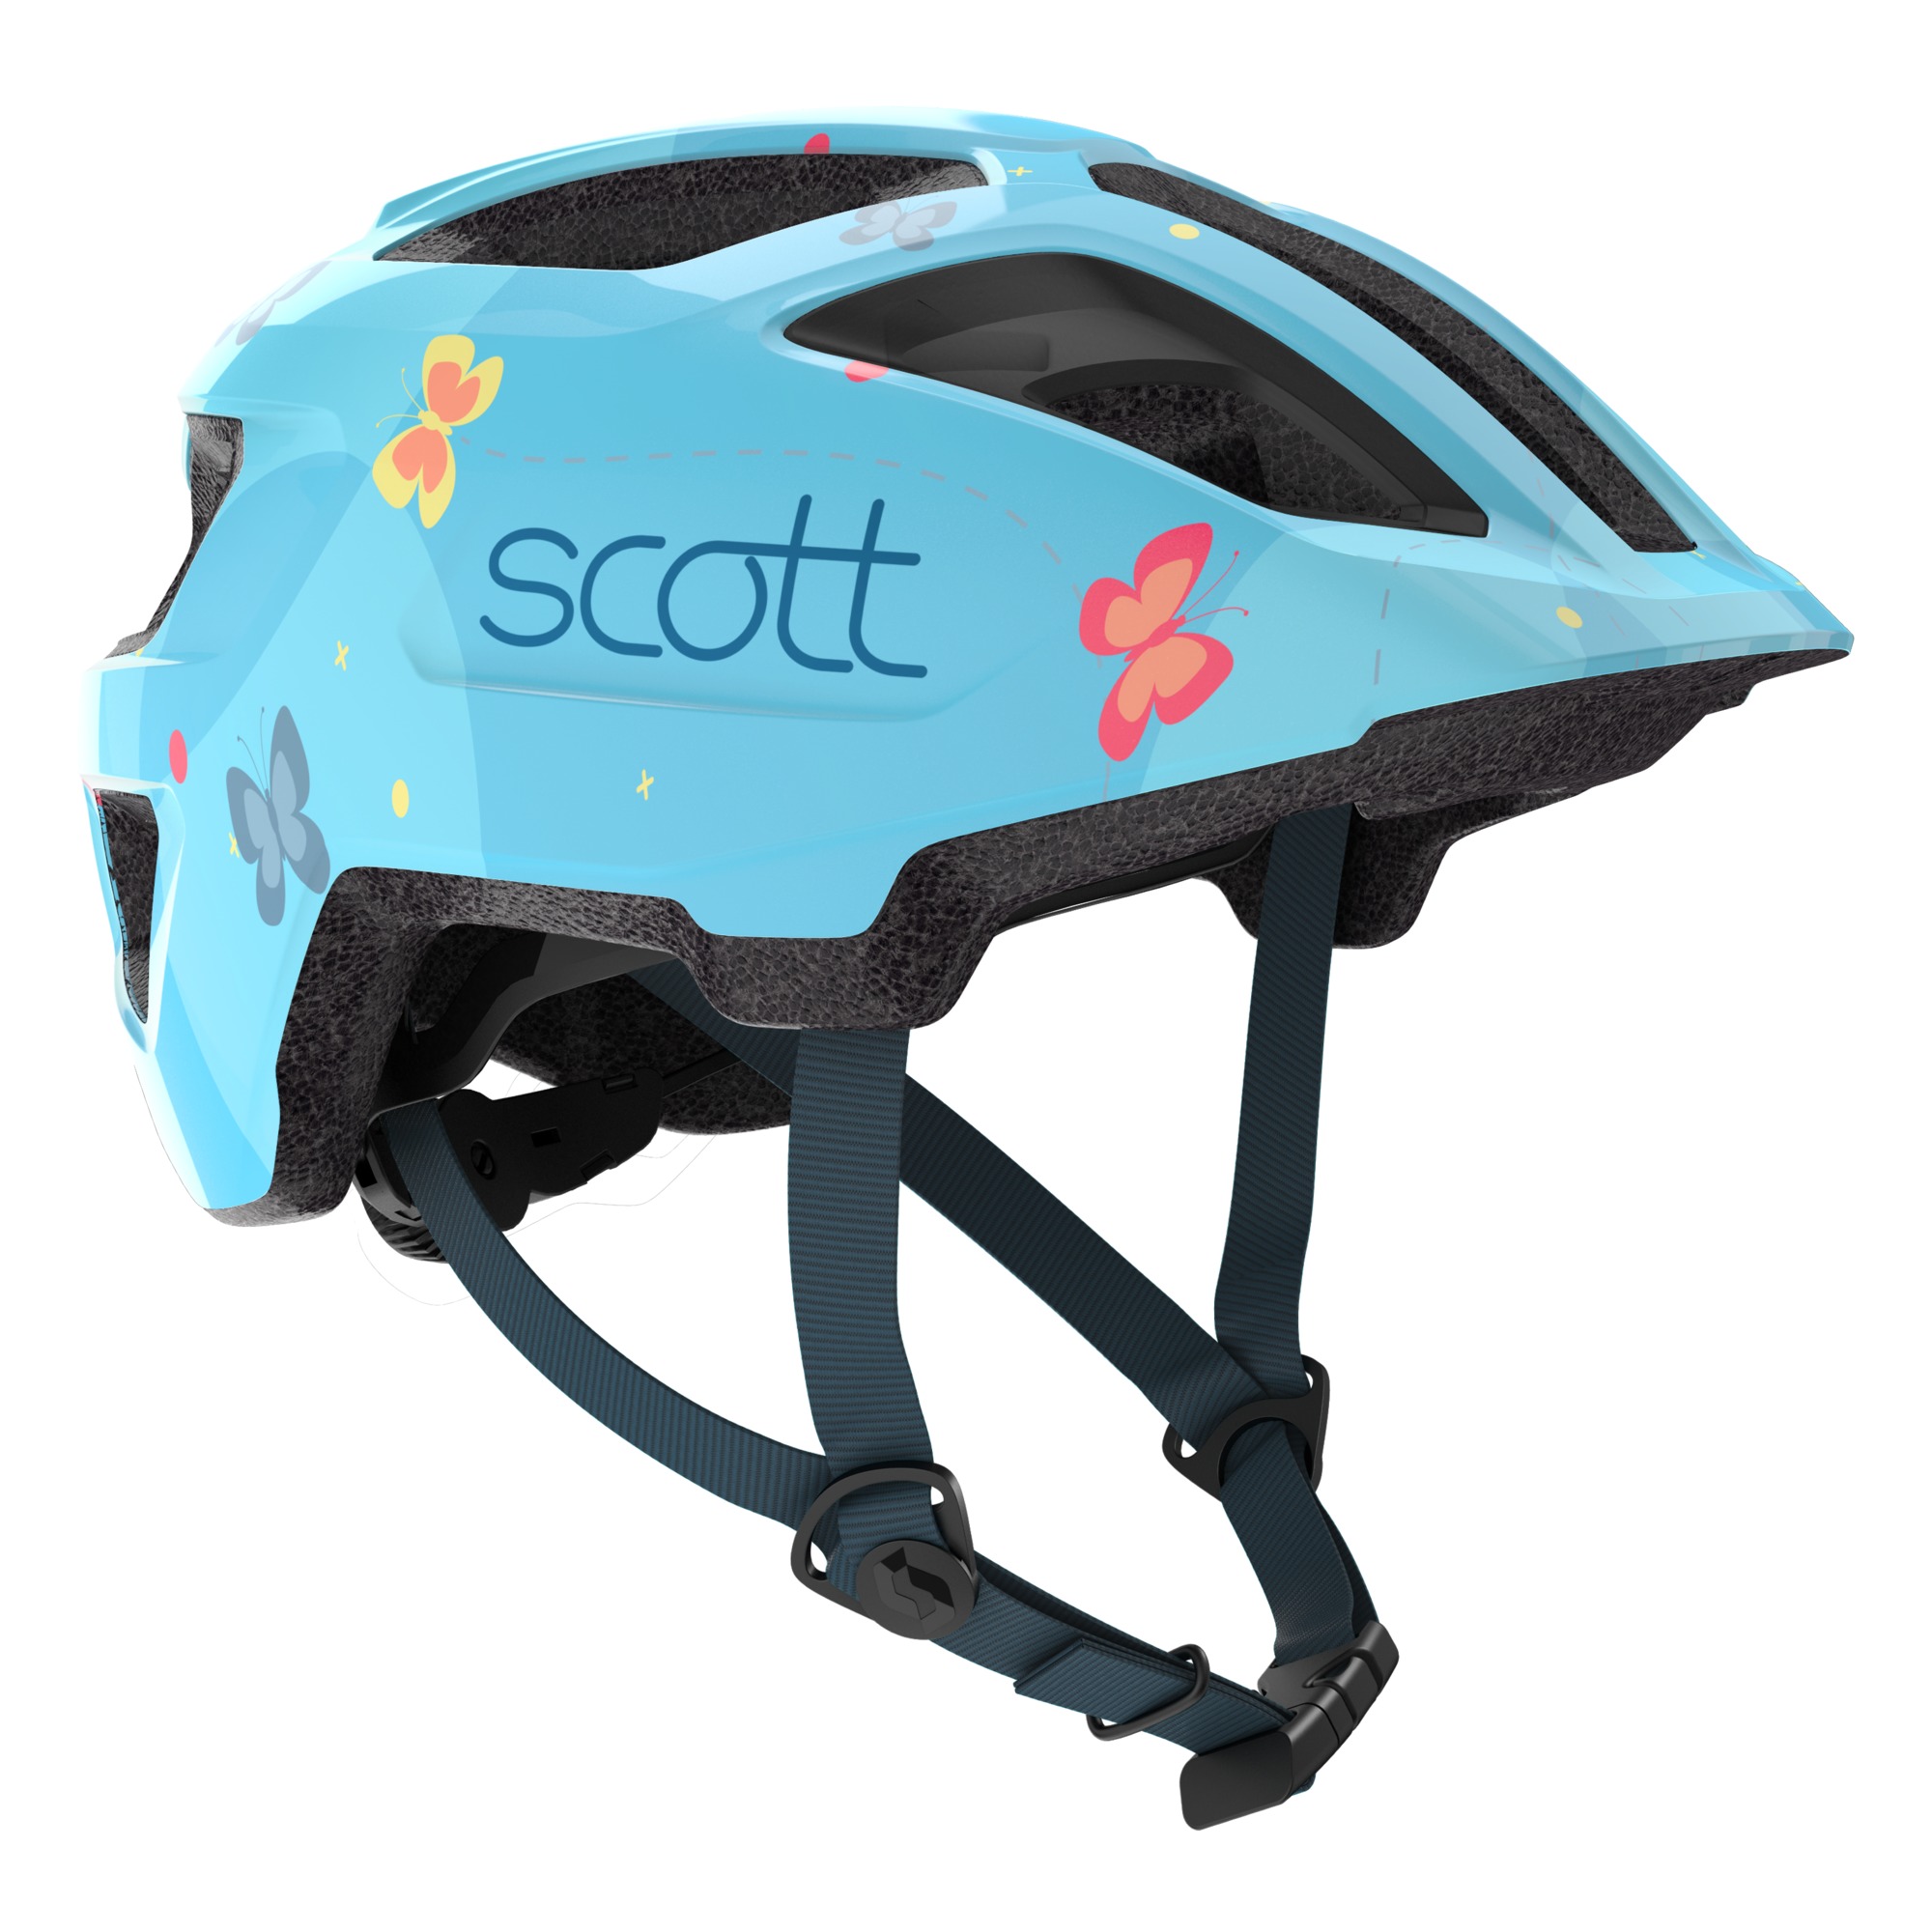 Scott bicicleta para niños casco spunto Kid 